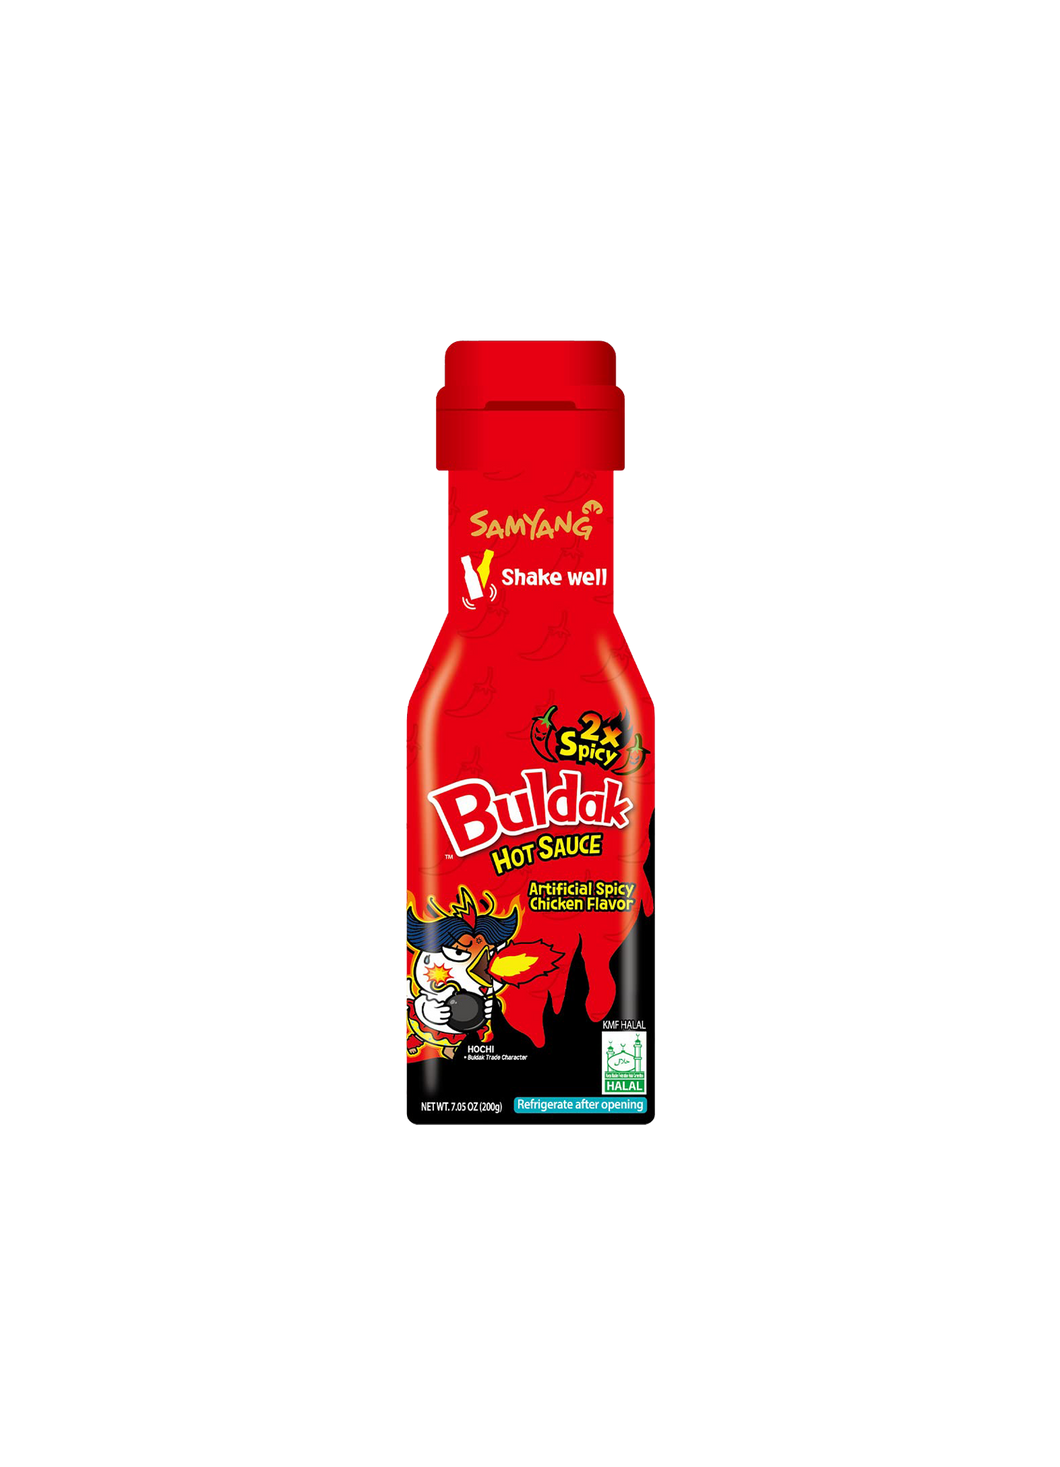 Samyang Buldak Hot Sauce Artificial 2x Spicy Chicken Flavour 200g